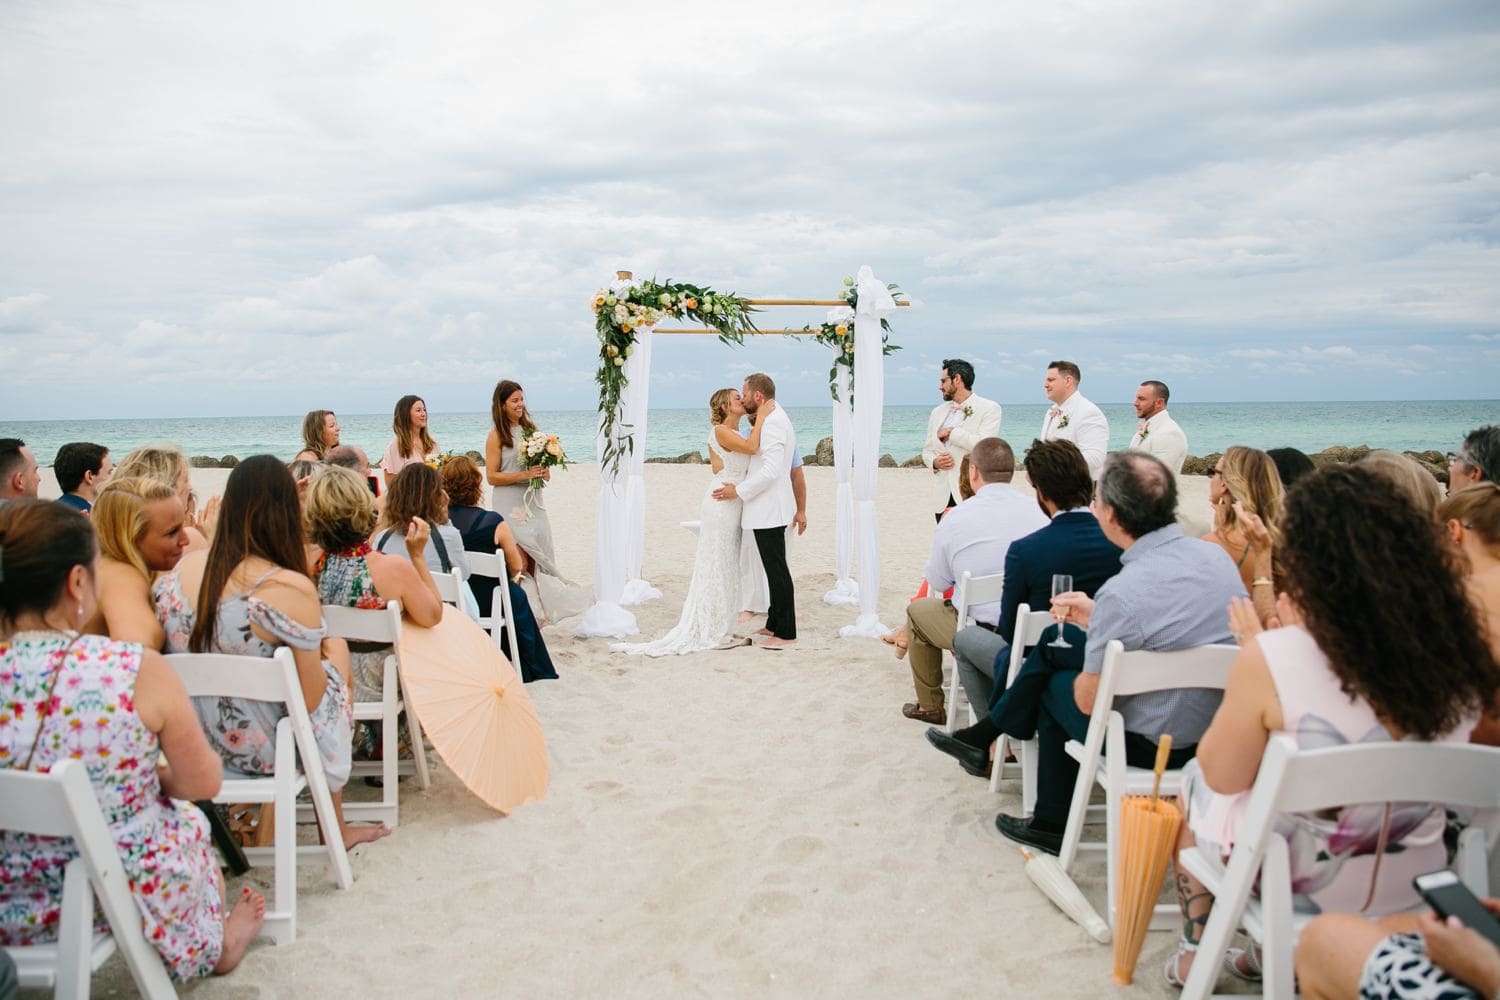 Destination Beach Wedding at The Palms hotel in Miami